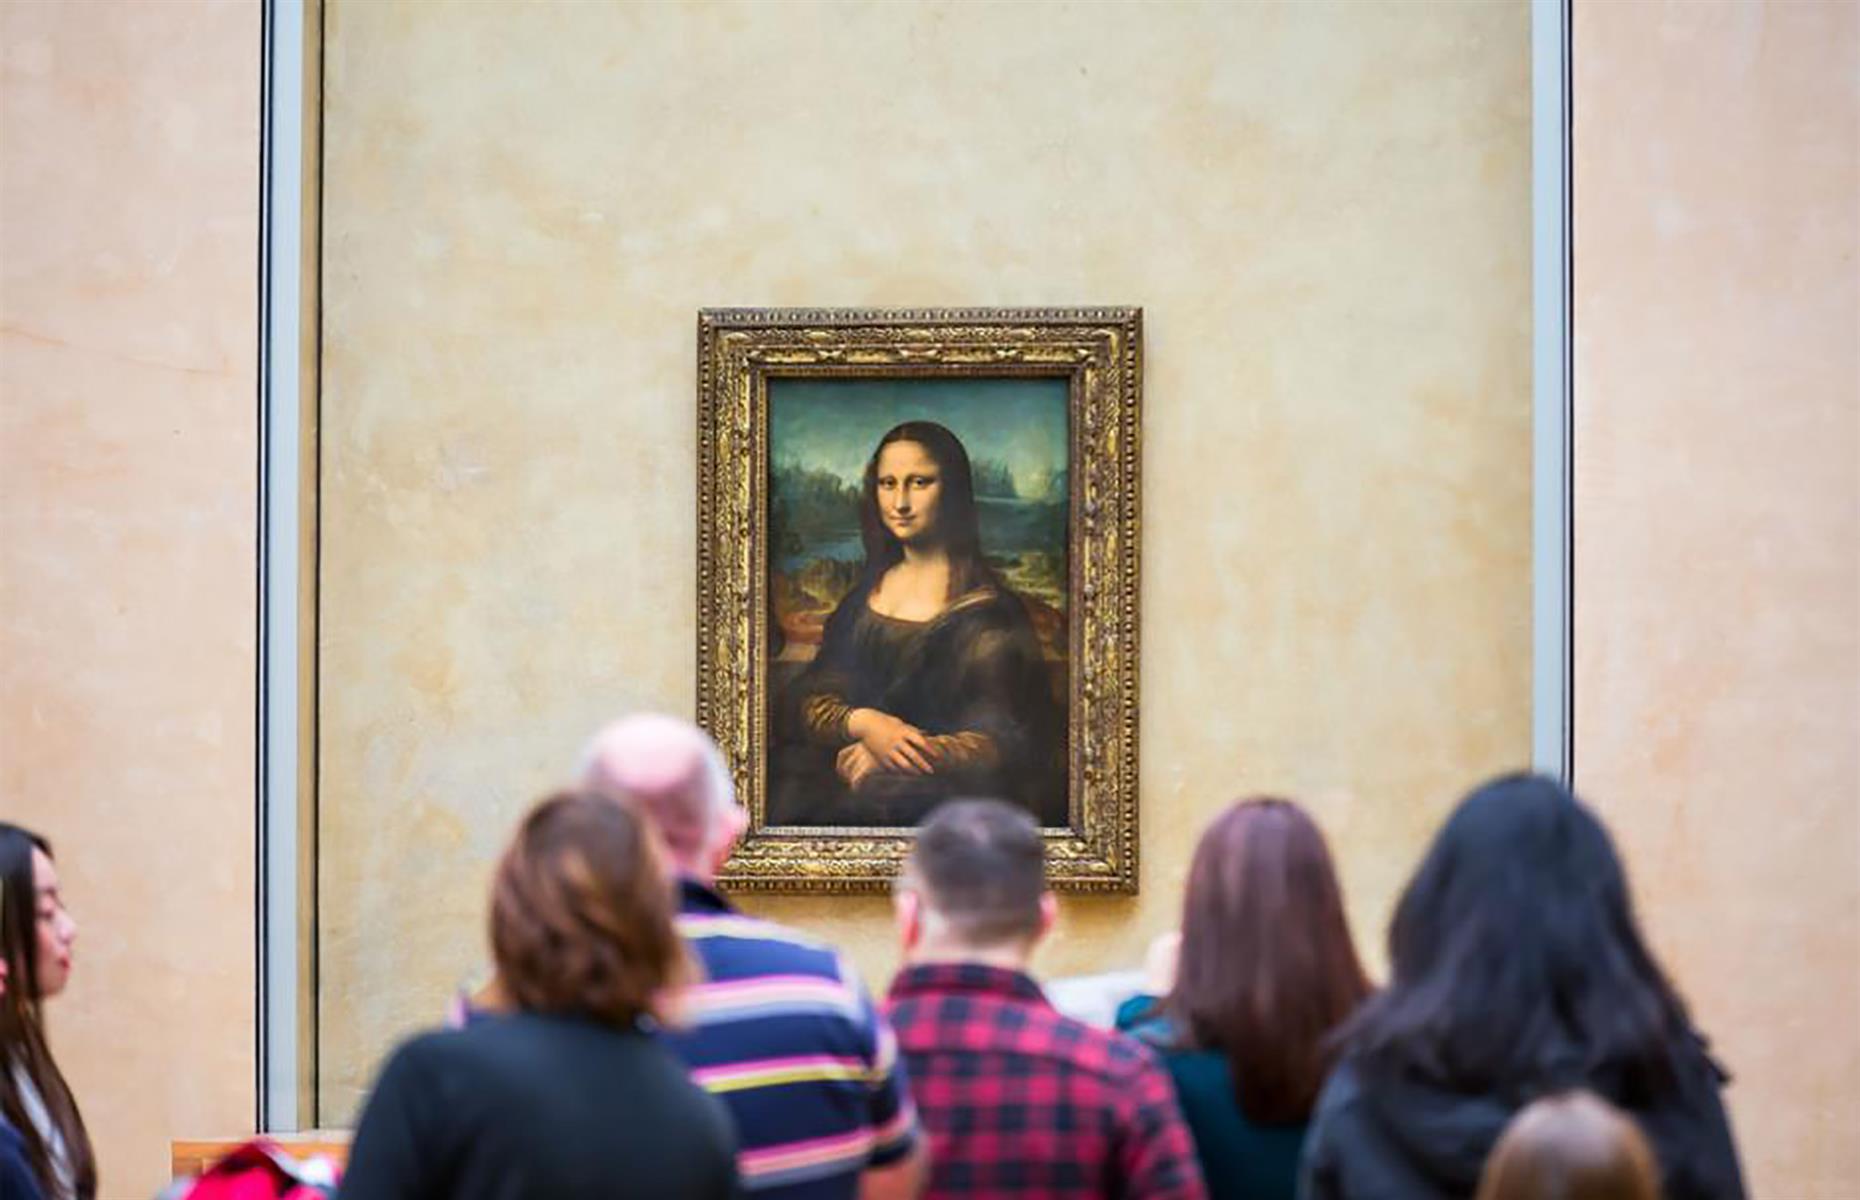 26. The Mona Lisa was too small